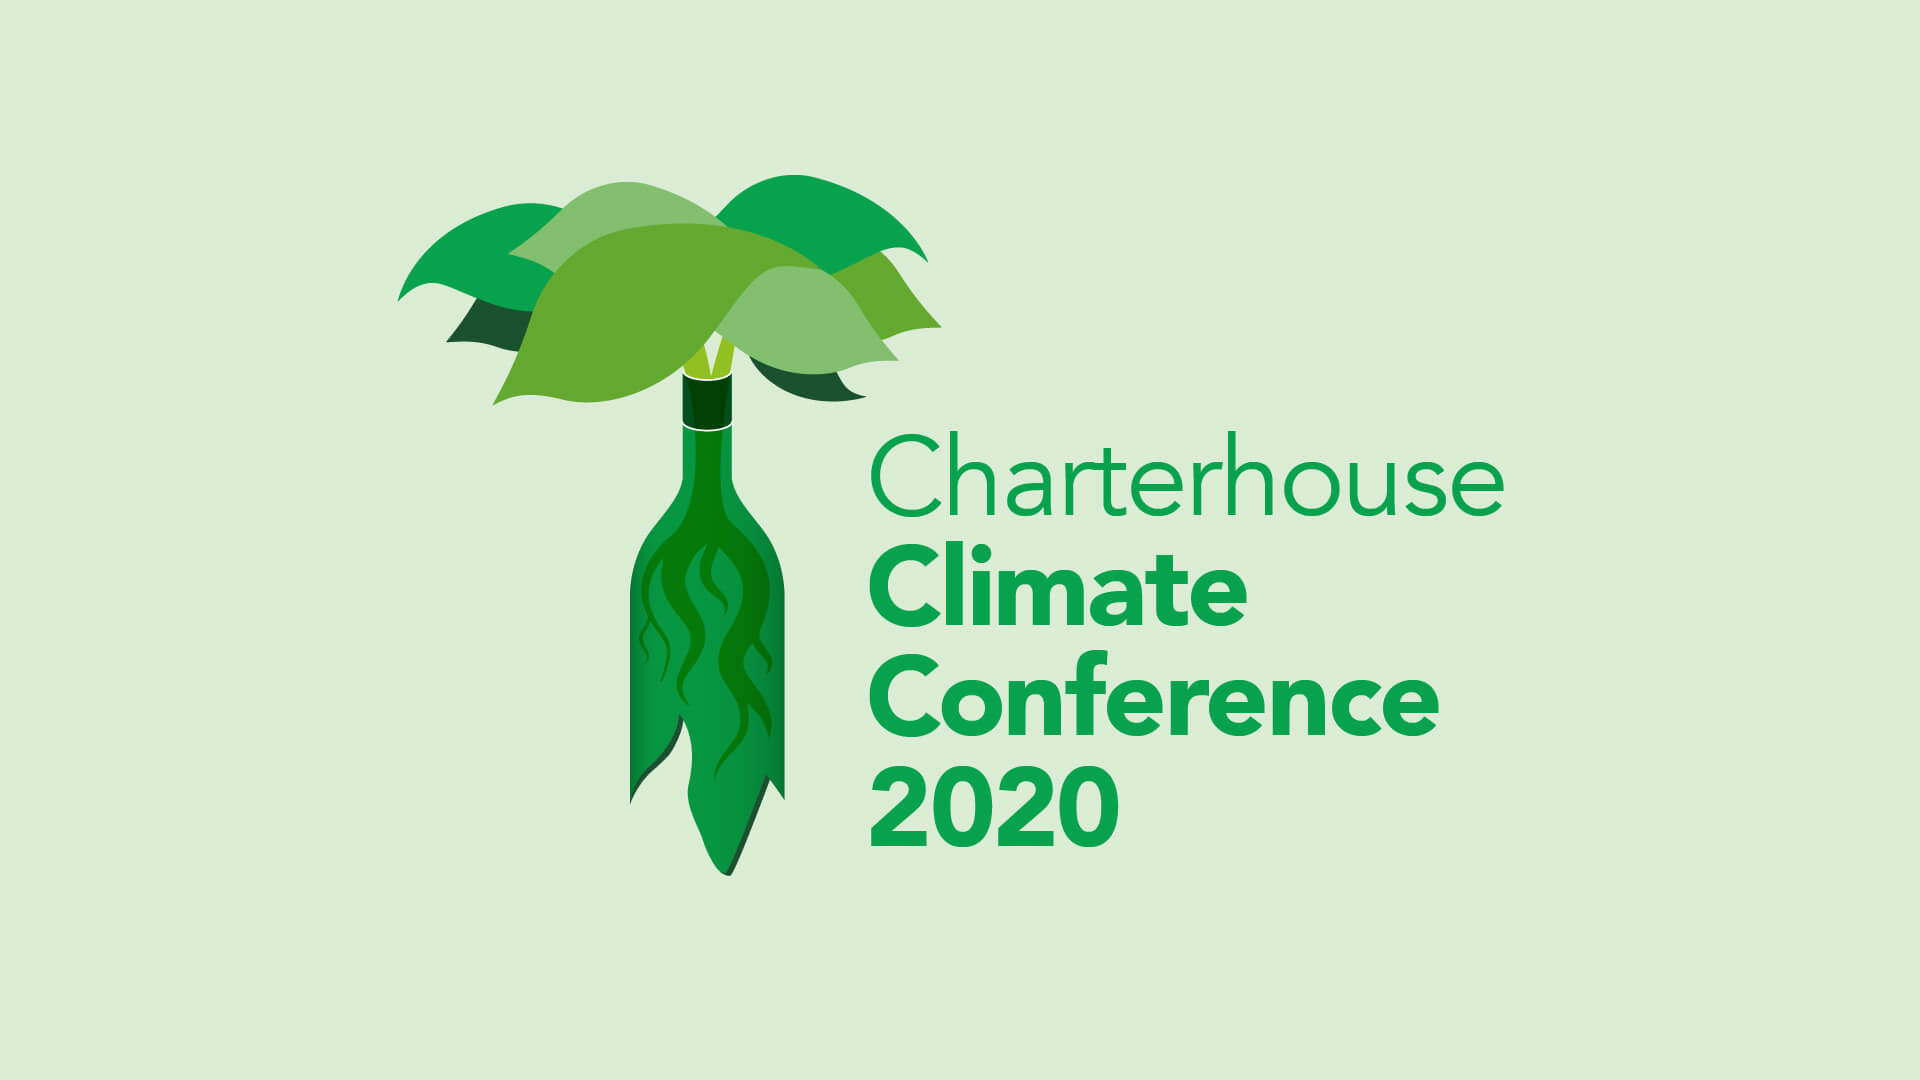 Charterhouse Climate Conference 2020 logo identity